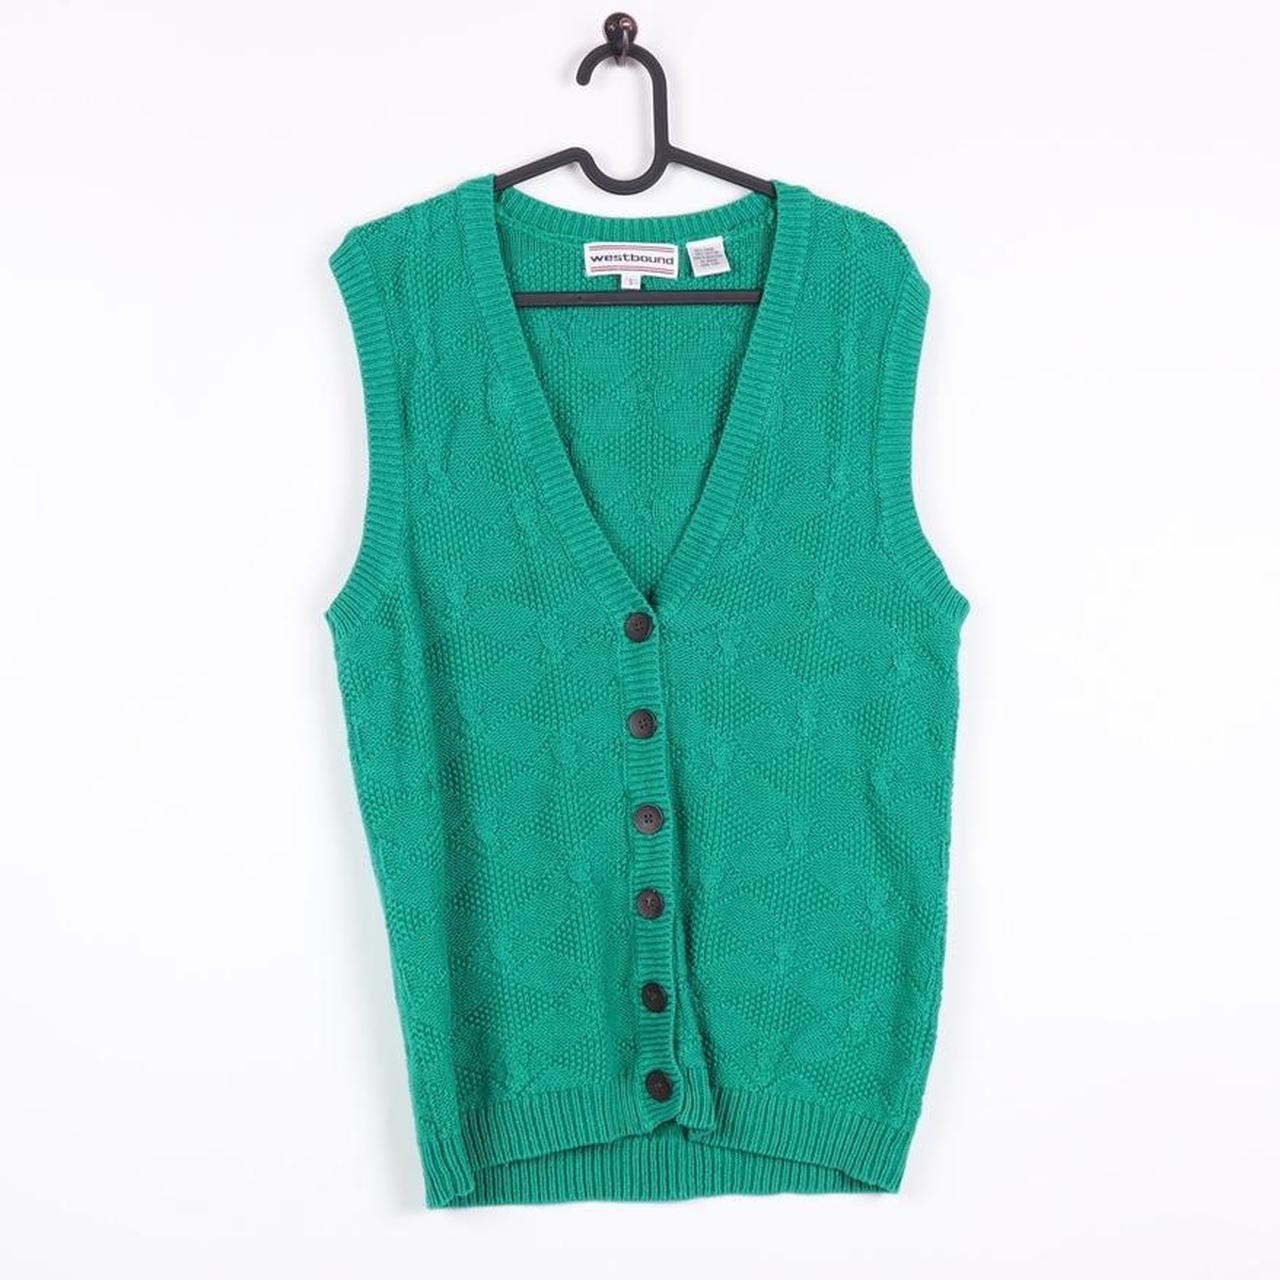 Vintage 90s Green Sweater Vest Size: Small Good... - Depop